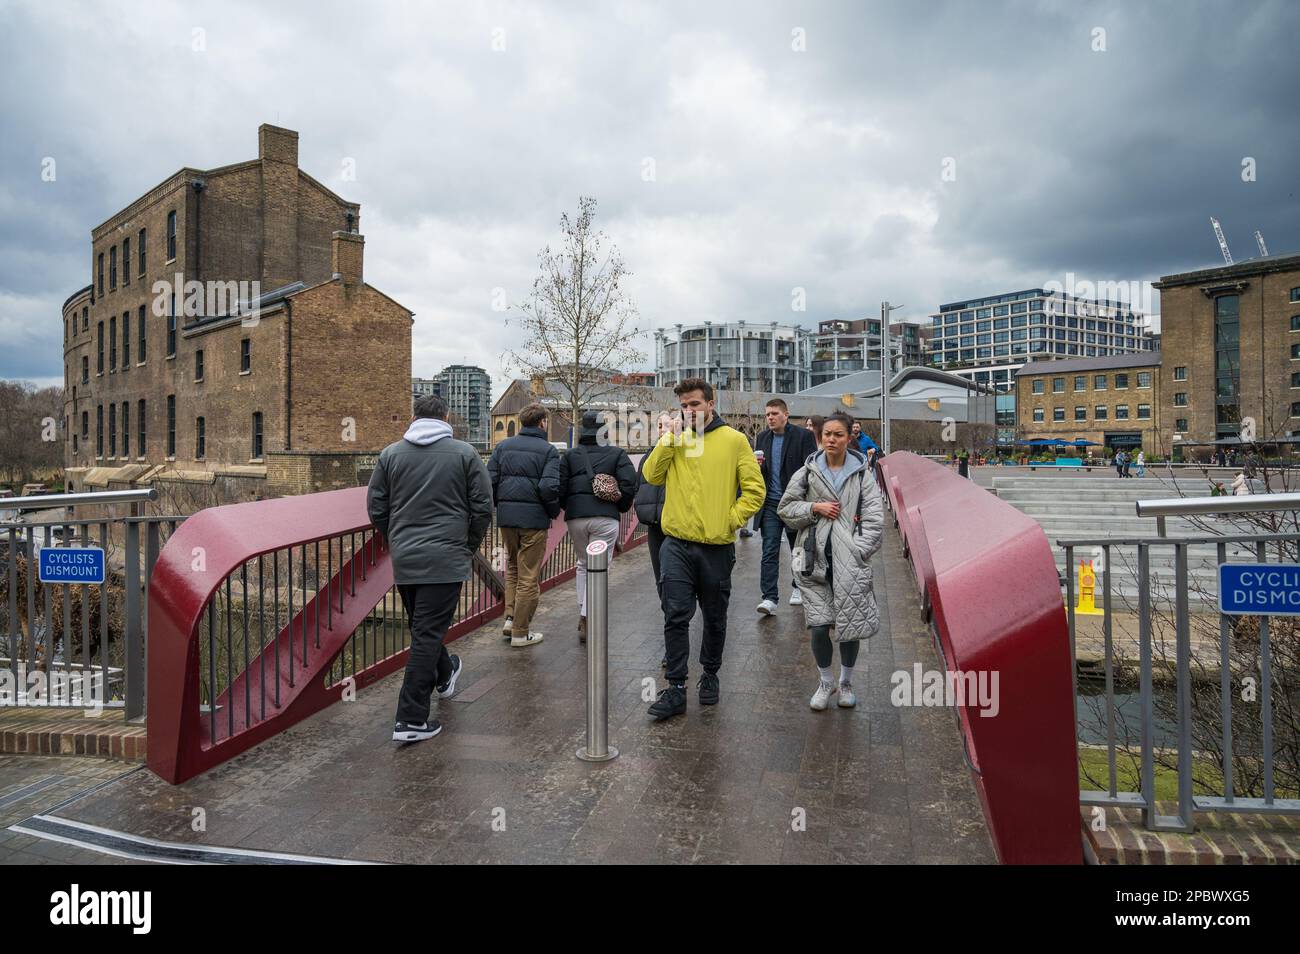 People crossing Esperance Bridge over the Regents Canal, Granary Square and Coal Drops Yard, Kings Cross, London, England, UK Stock Photo